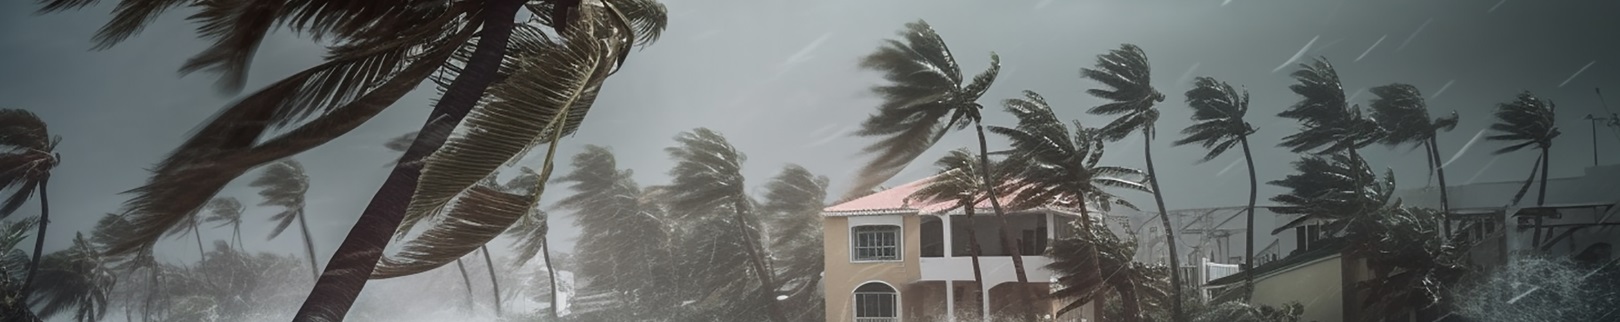 Hurricane Matthew: How to File a Homeowners Insurance Claim